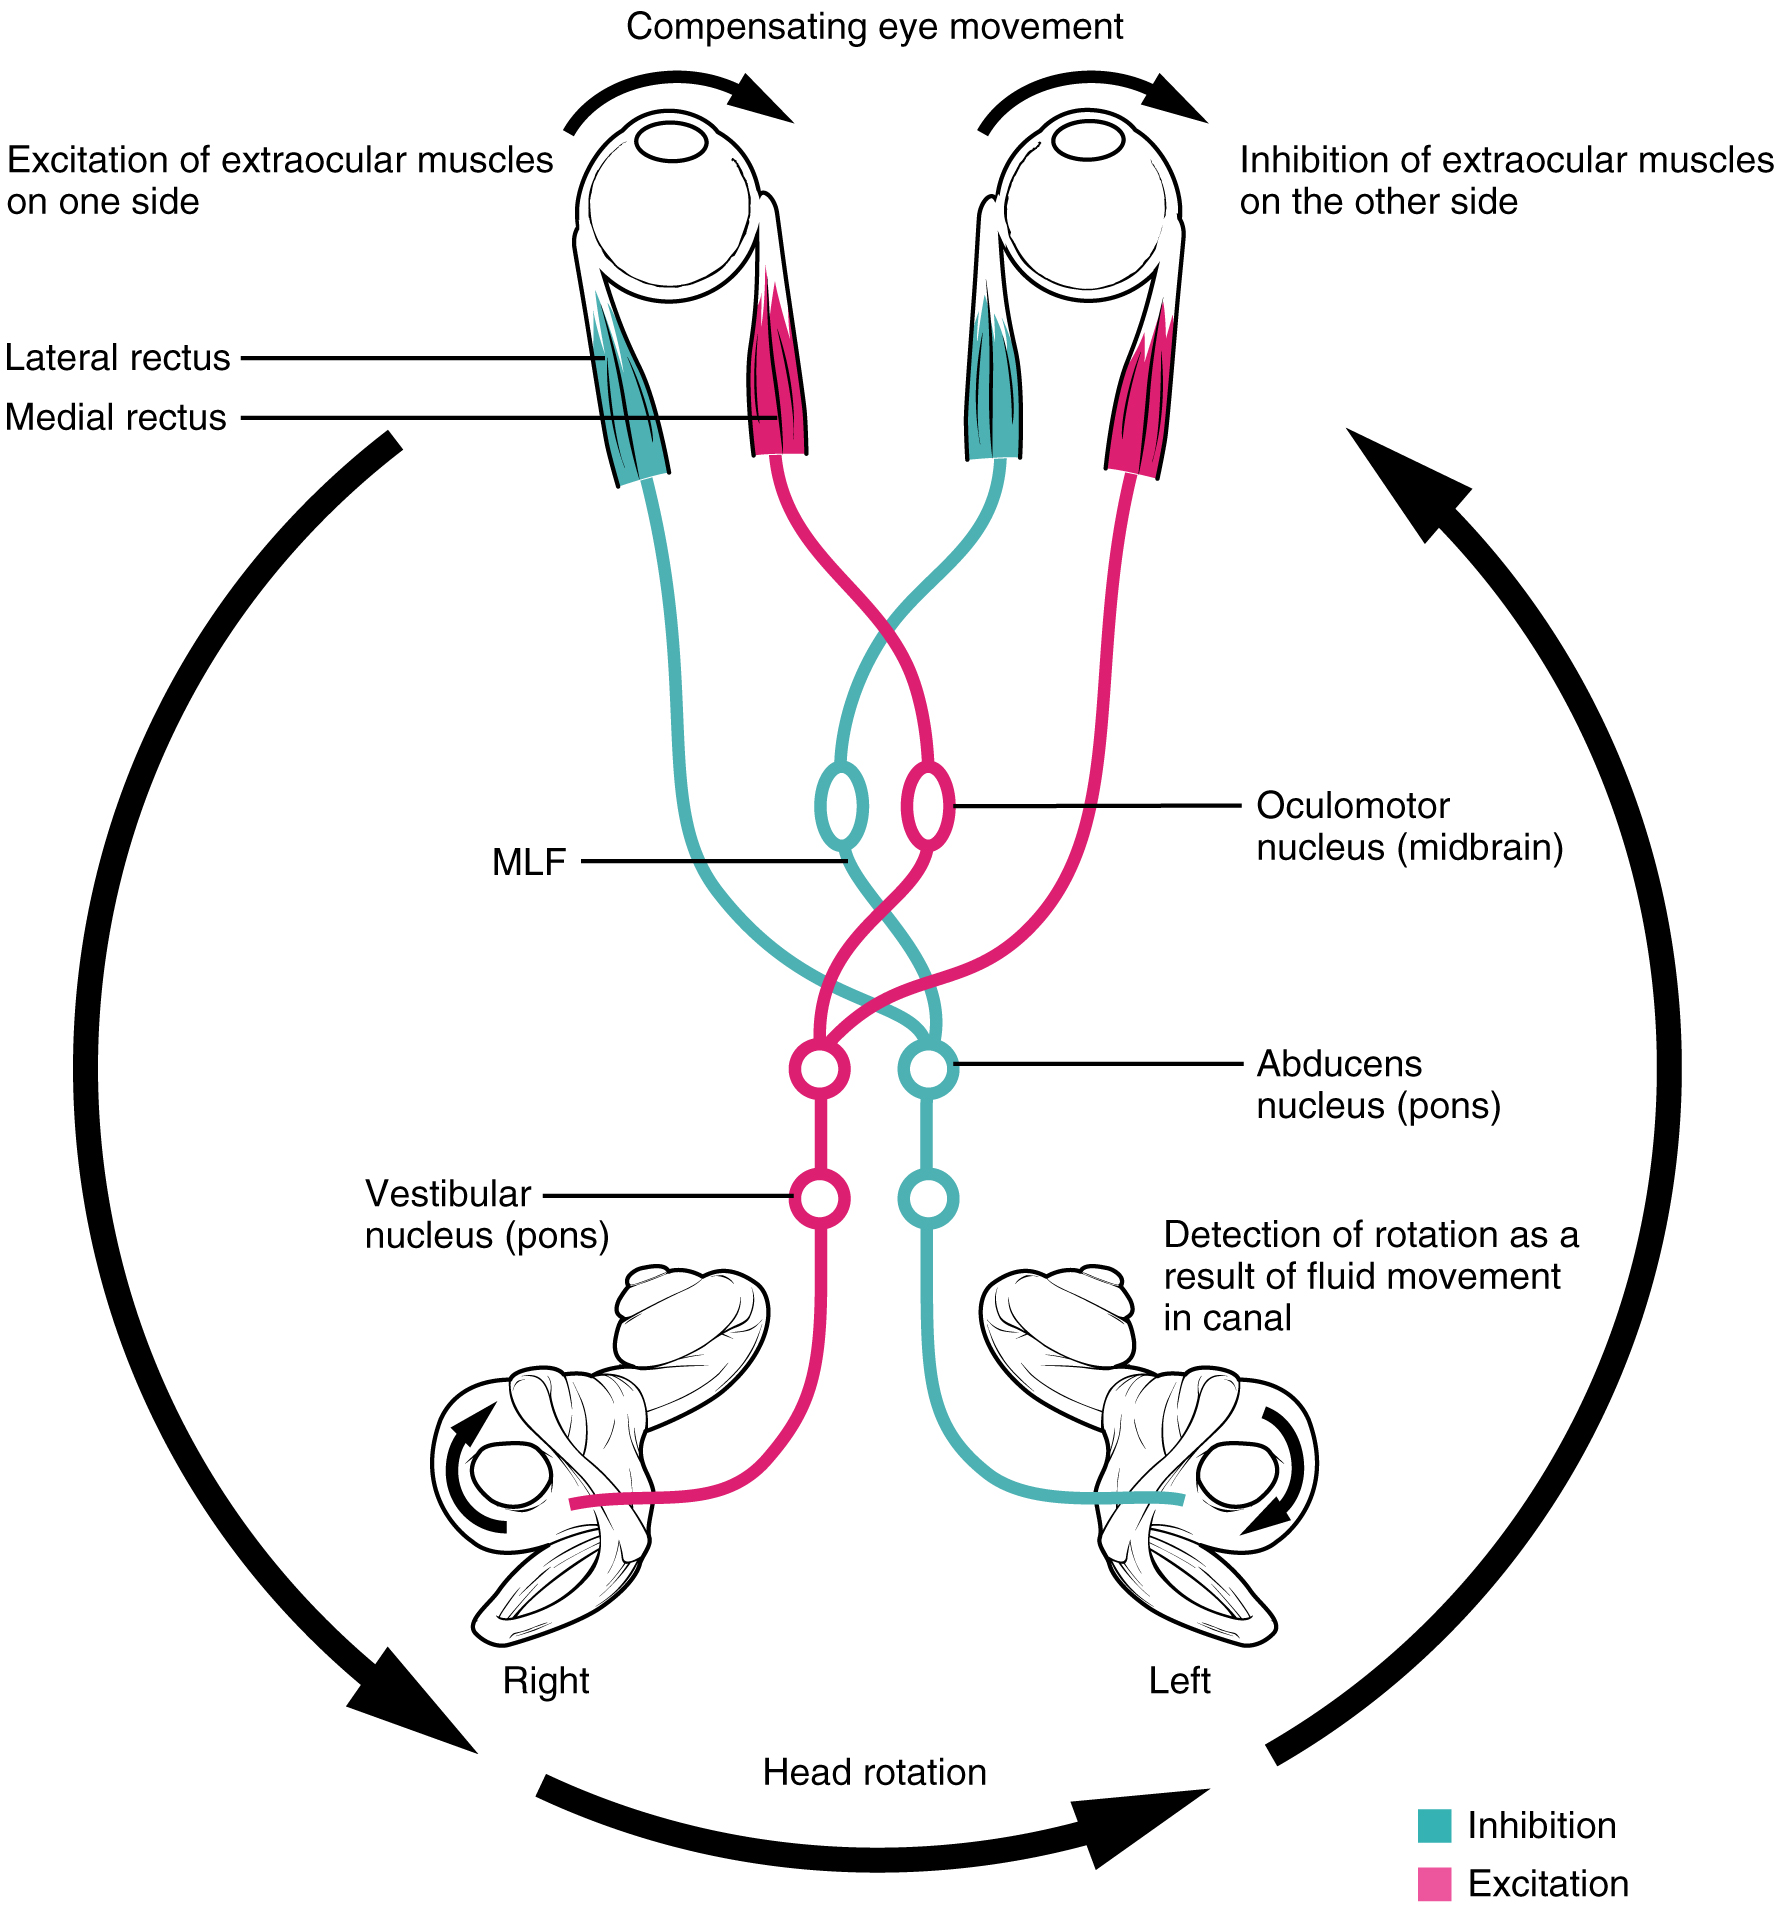 Vestibulookuläre Reflex (VOR) und Hirnnerv VIII: Nervus vestibulocochlearis